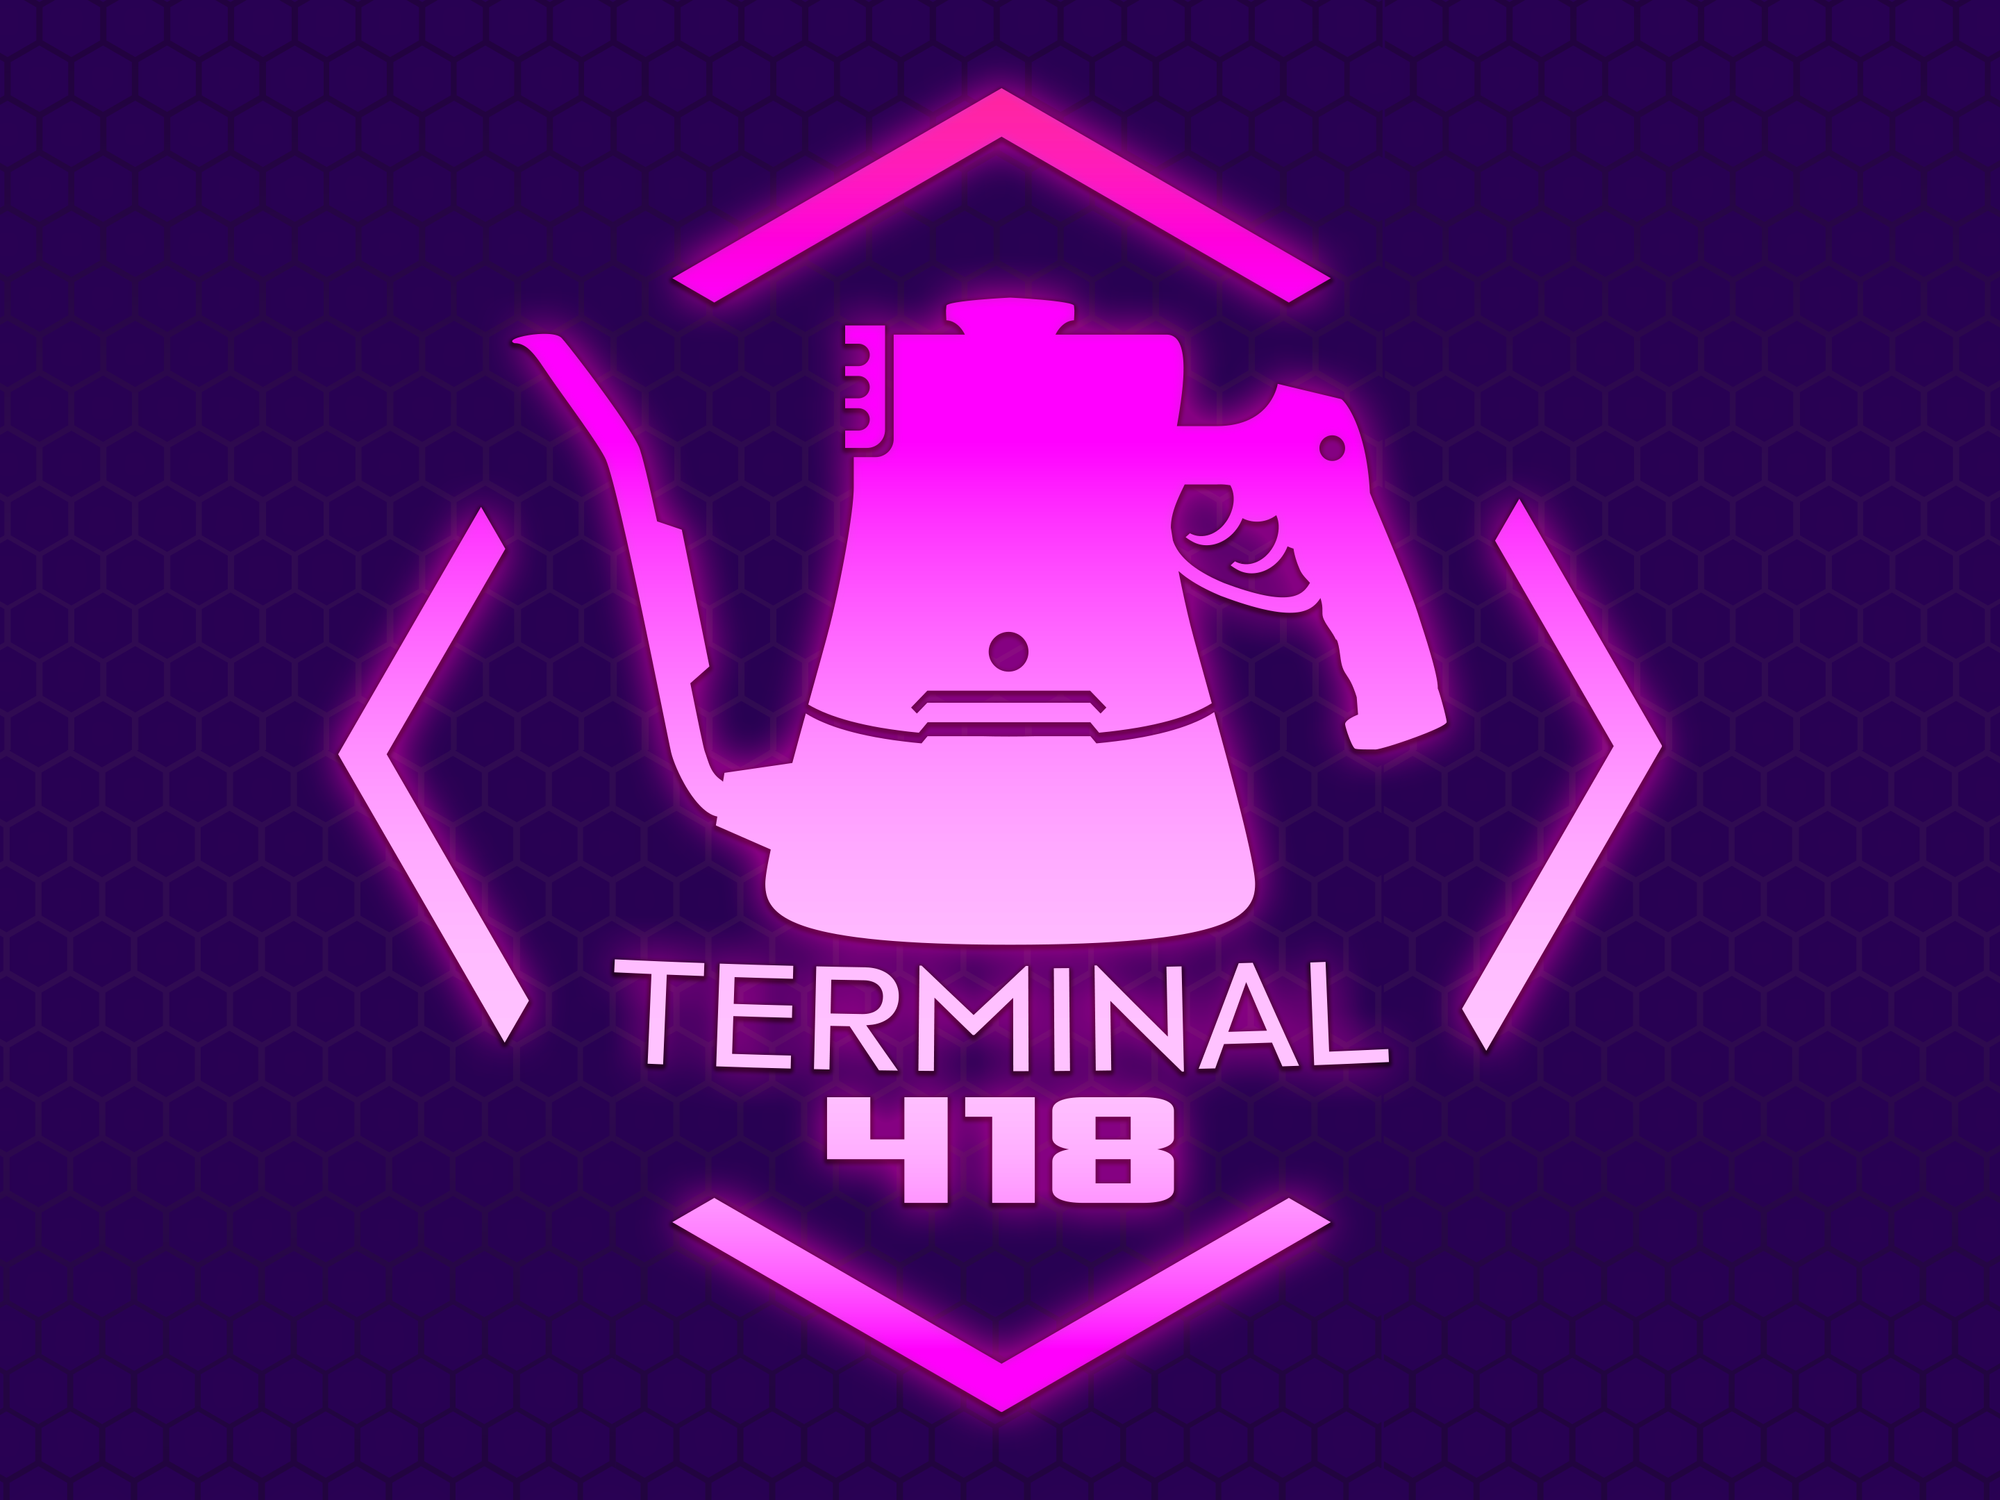 Terminal 418